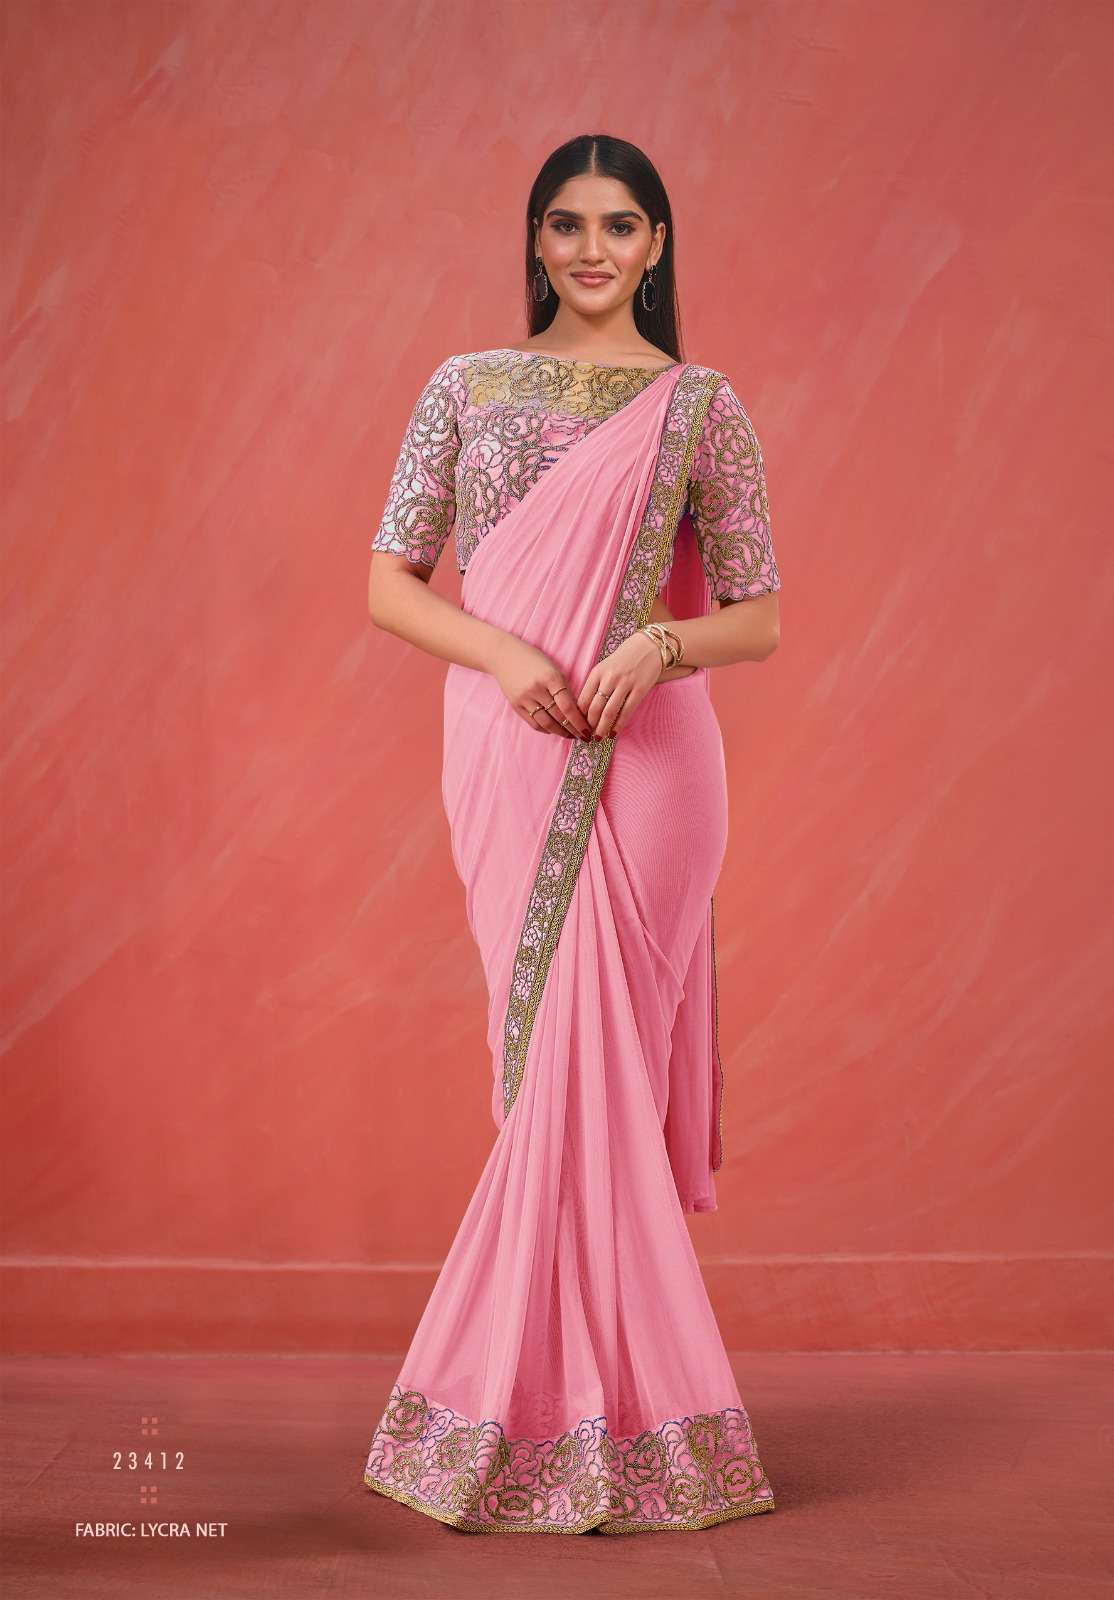 Beautiful Indian Saree Fashion for Weddings